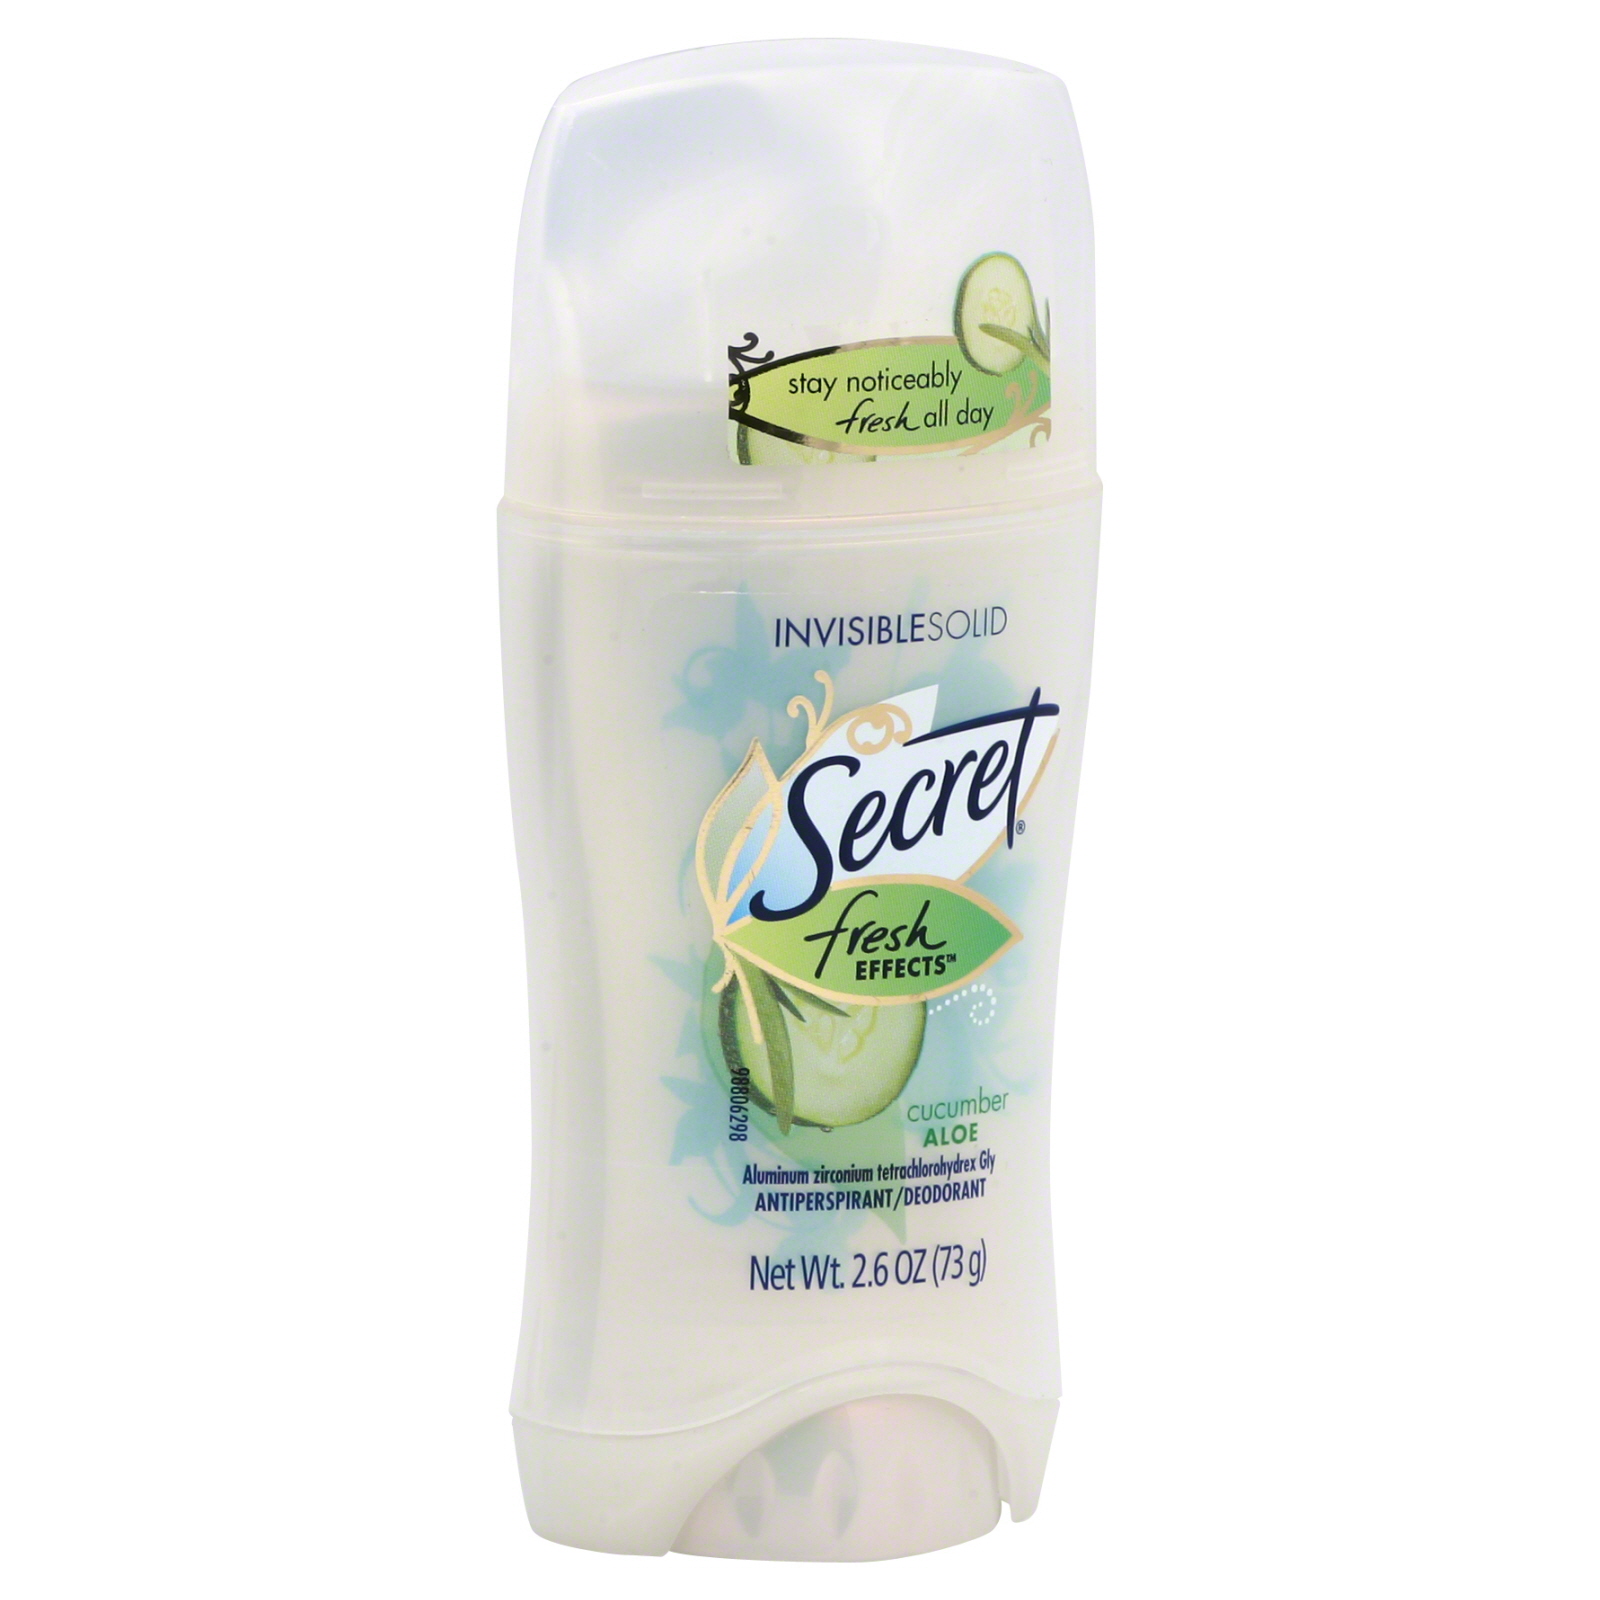 Secret Fresh Effects Antiperspirant/Deodorant, Invisible Solid, Cucumber Aloe, 2.6 oz (73 g)